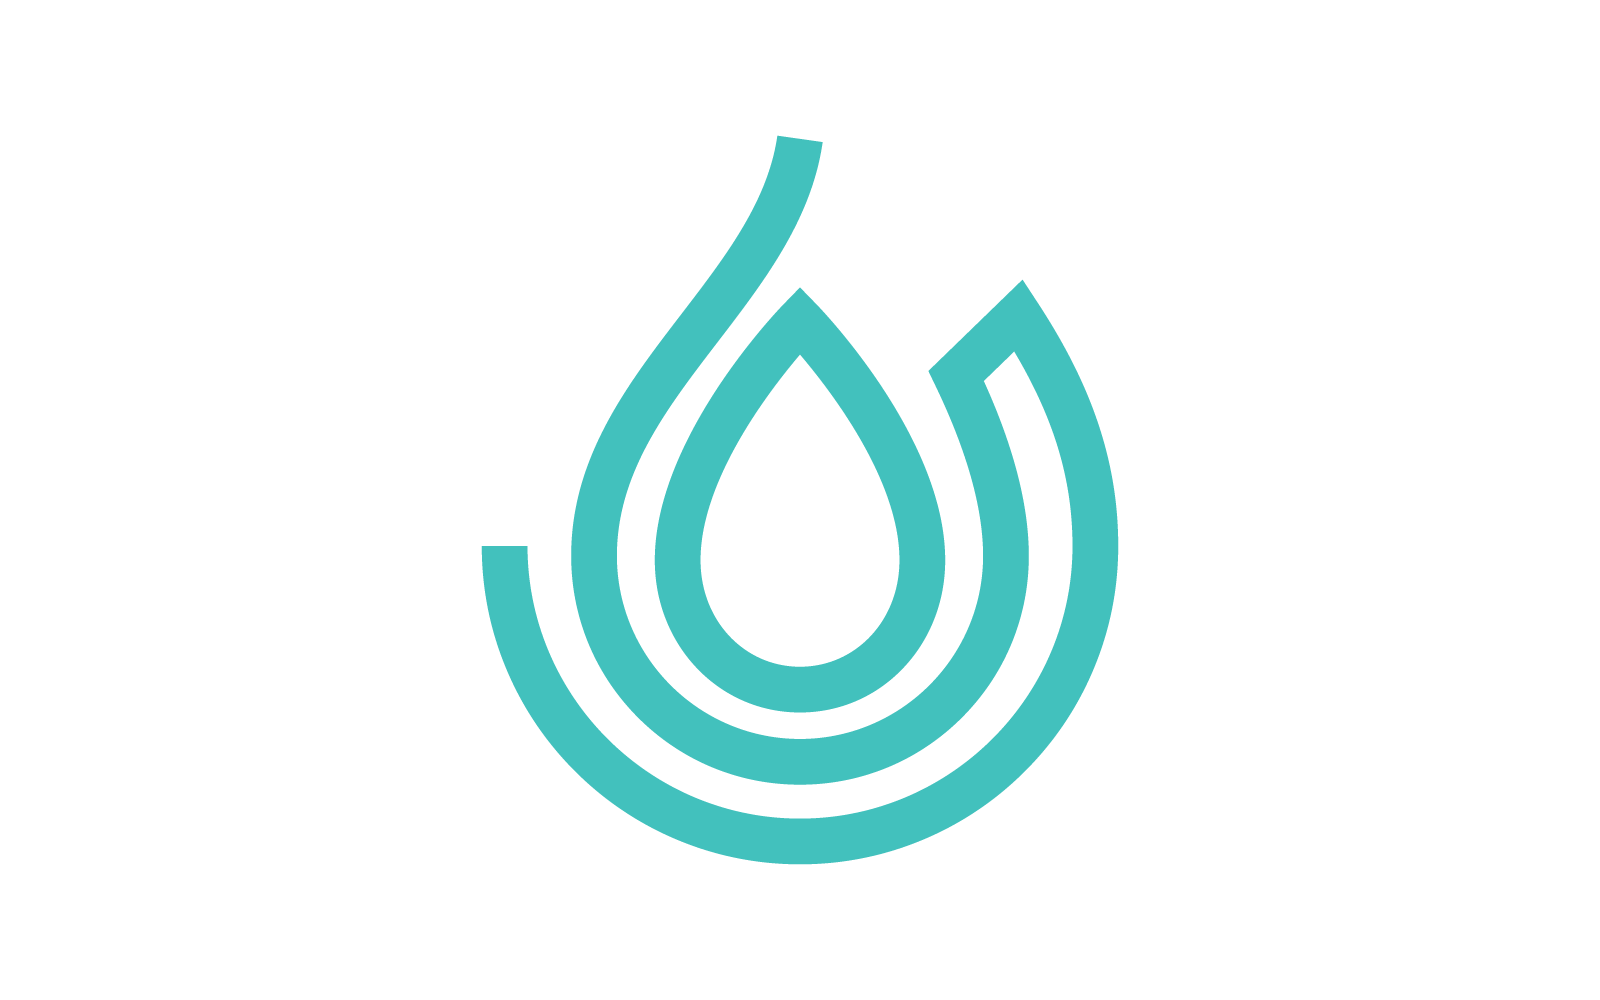 Water drop illustration logo icon vector design